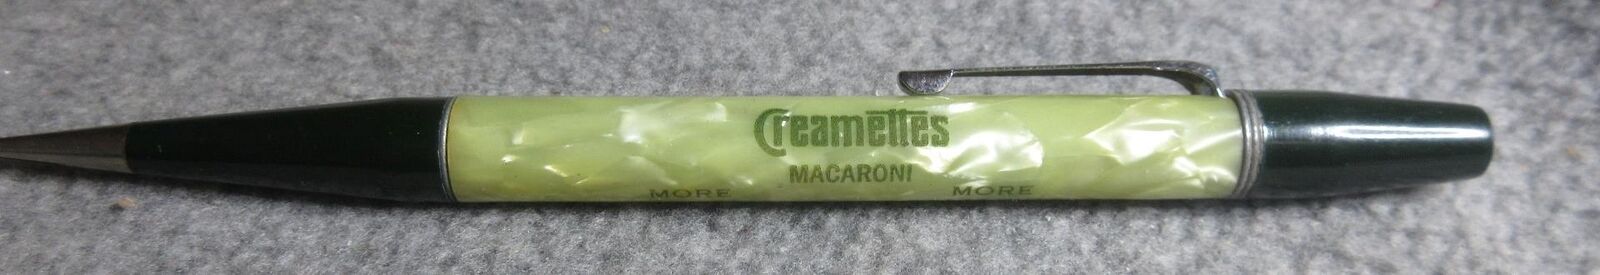 Vintage Creamettes Macaroni Mechanical Pencil marble celluloid tender delicious